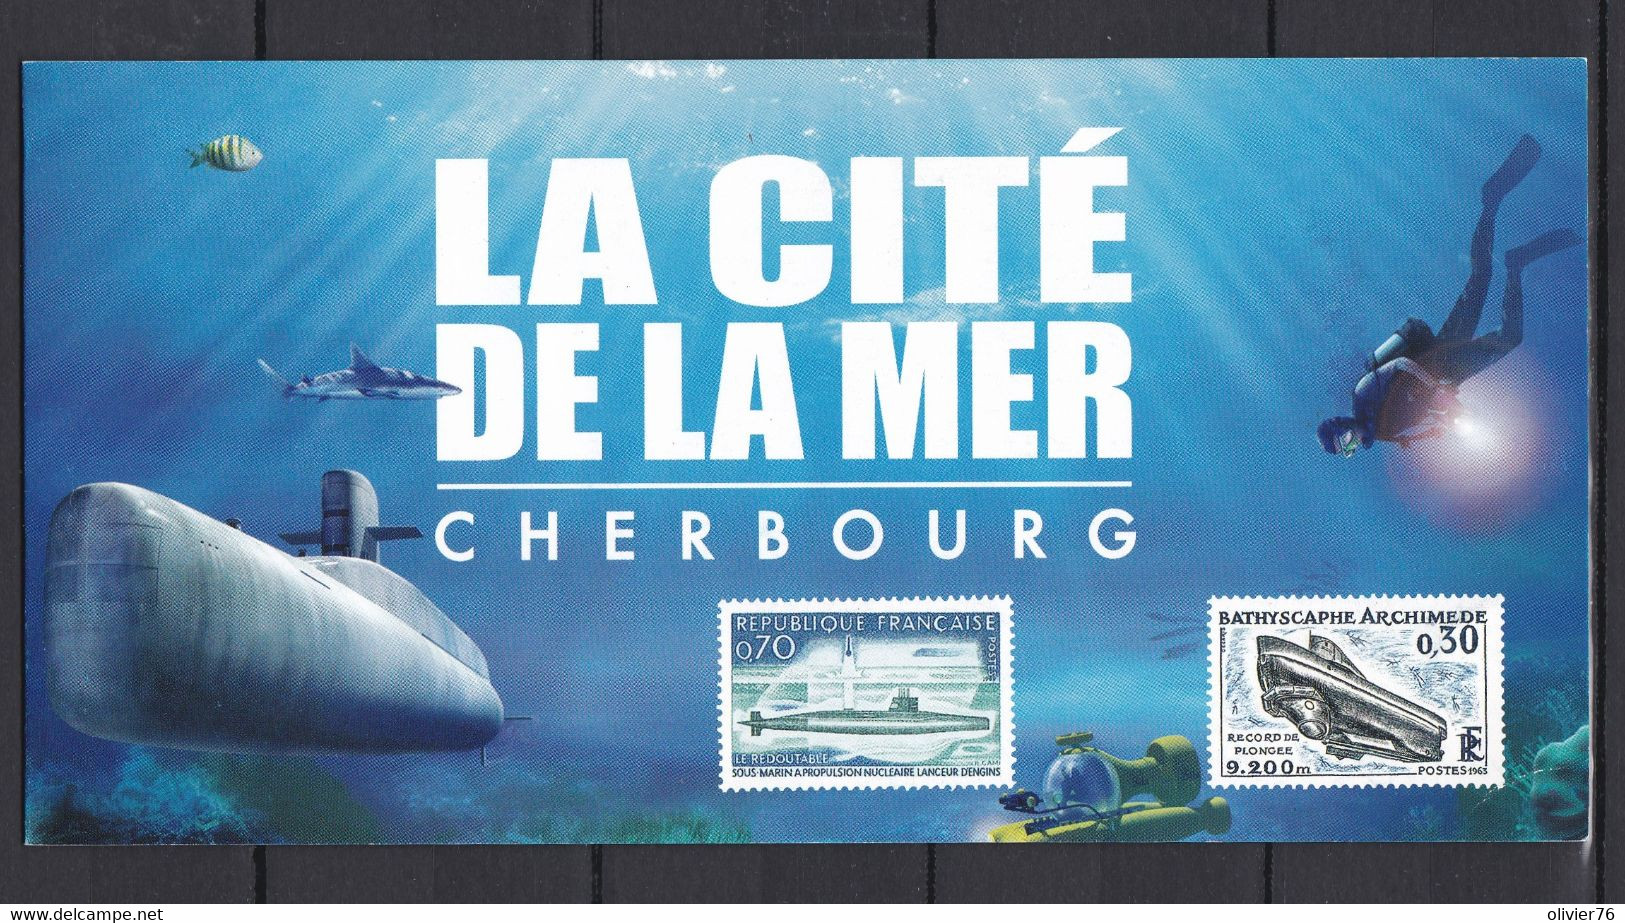 Lot enveloppes et cartes transport maritime, voile, mer, Cherbourg